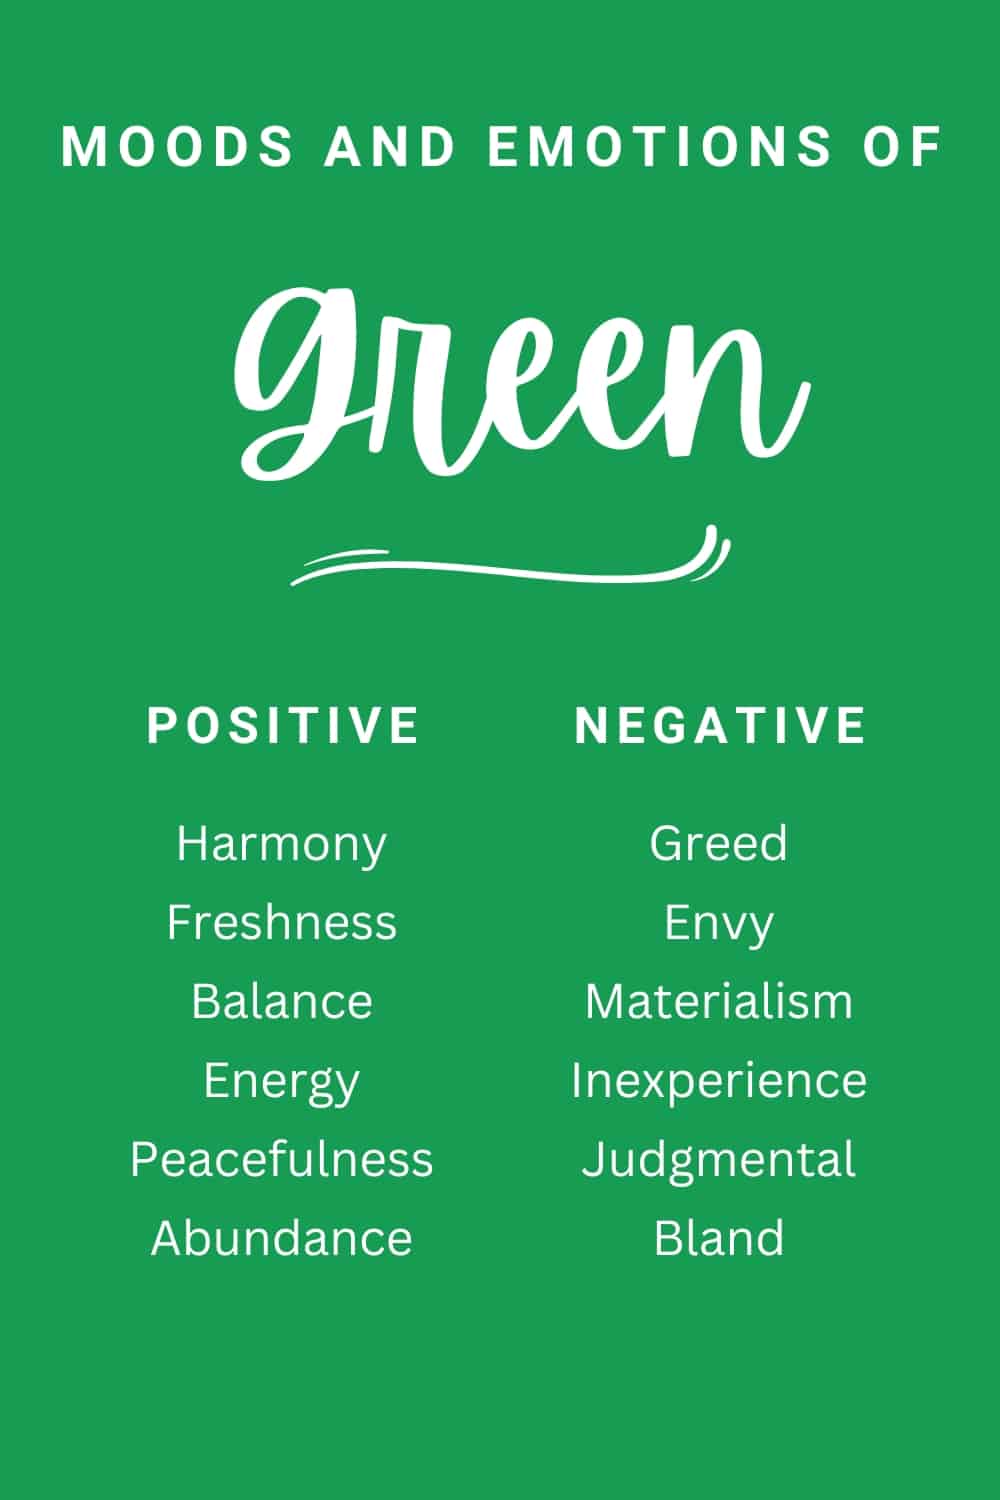 Green emotions